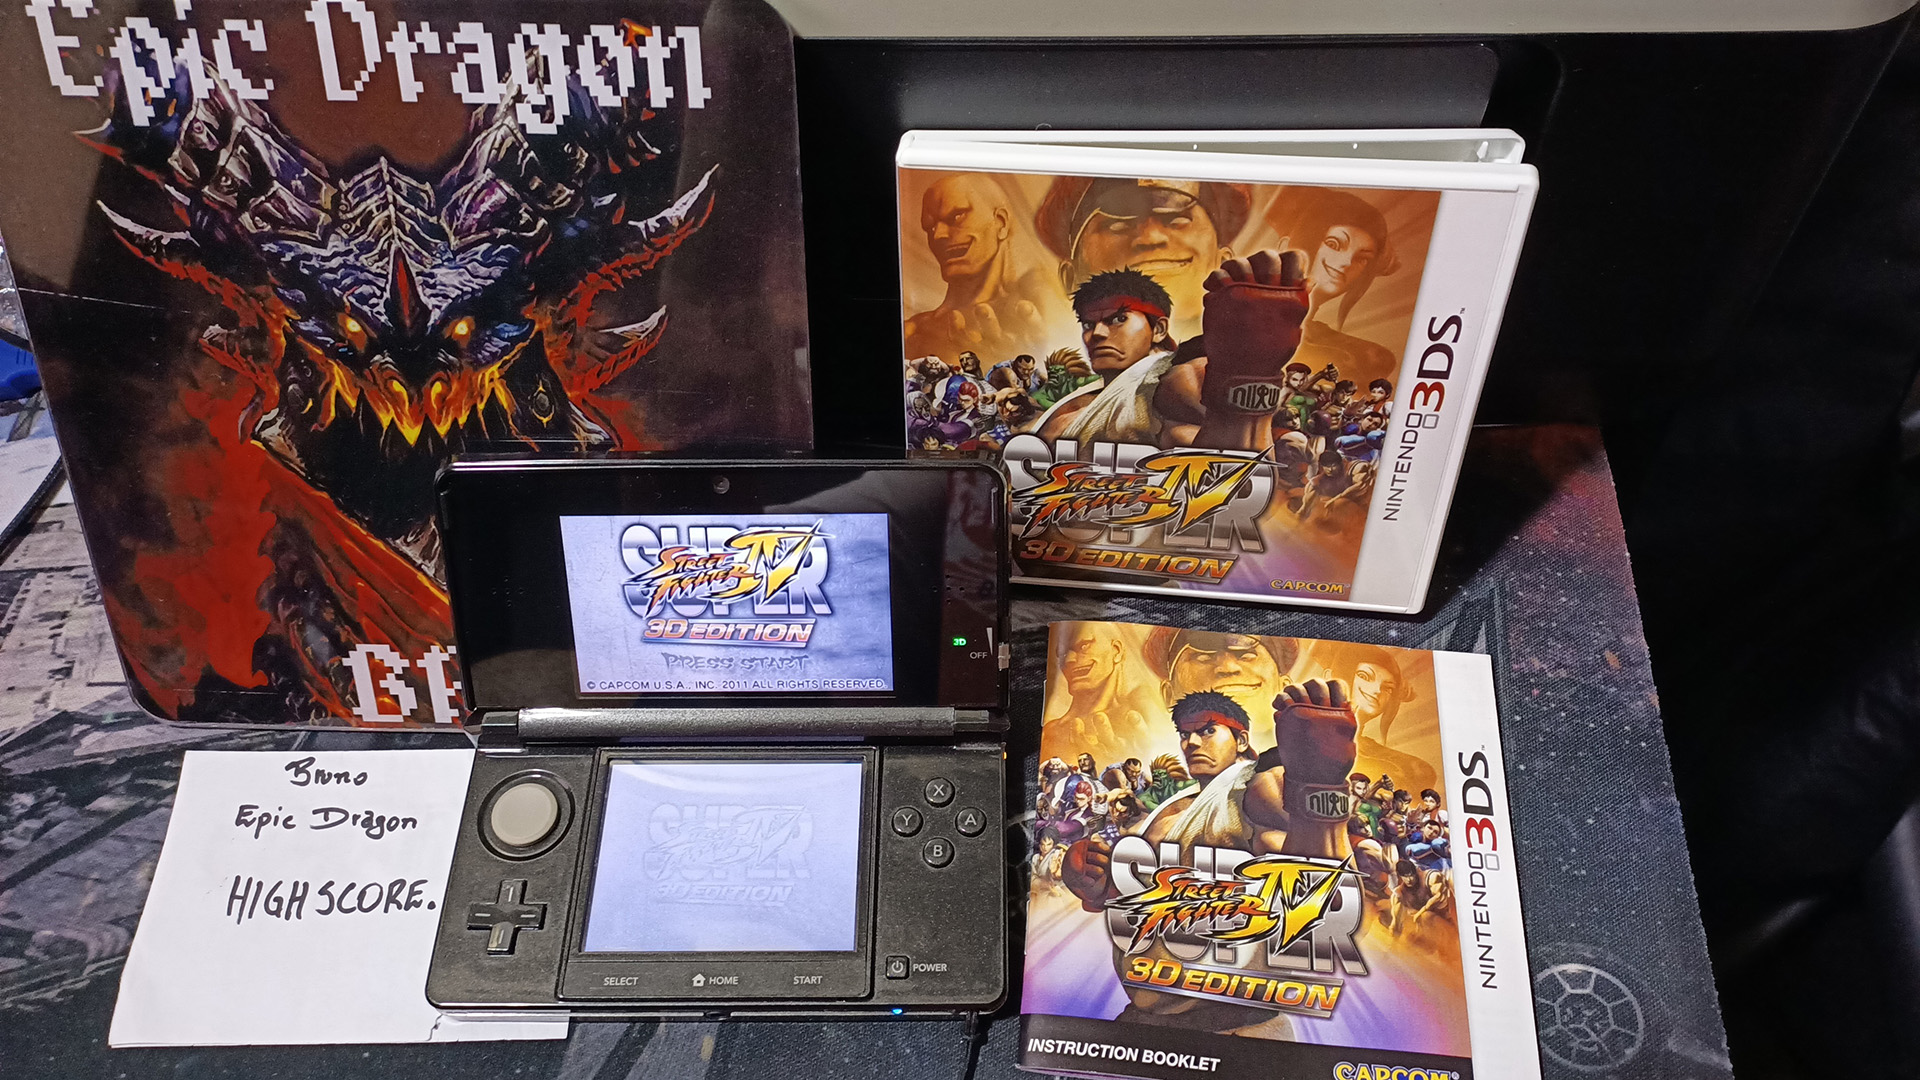 EpicDragon: Super Street Fighter IV 3D Edition: Arcade: El Fuerte (Nintendo 3DS) 745,200 points on 2022-08-01 20:56:41